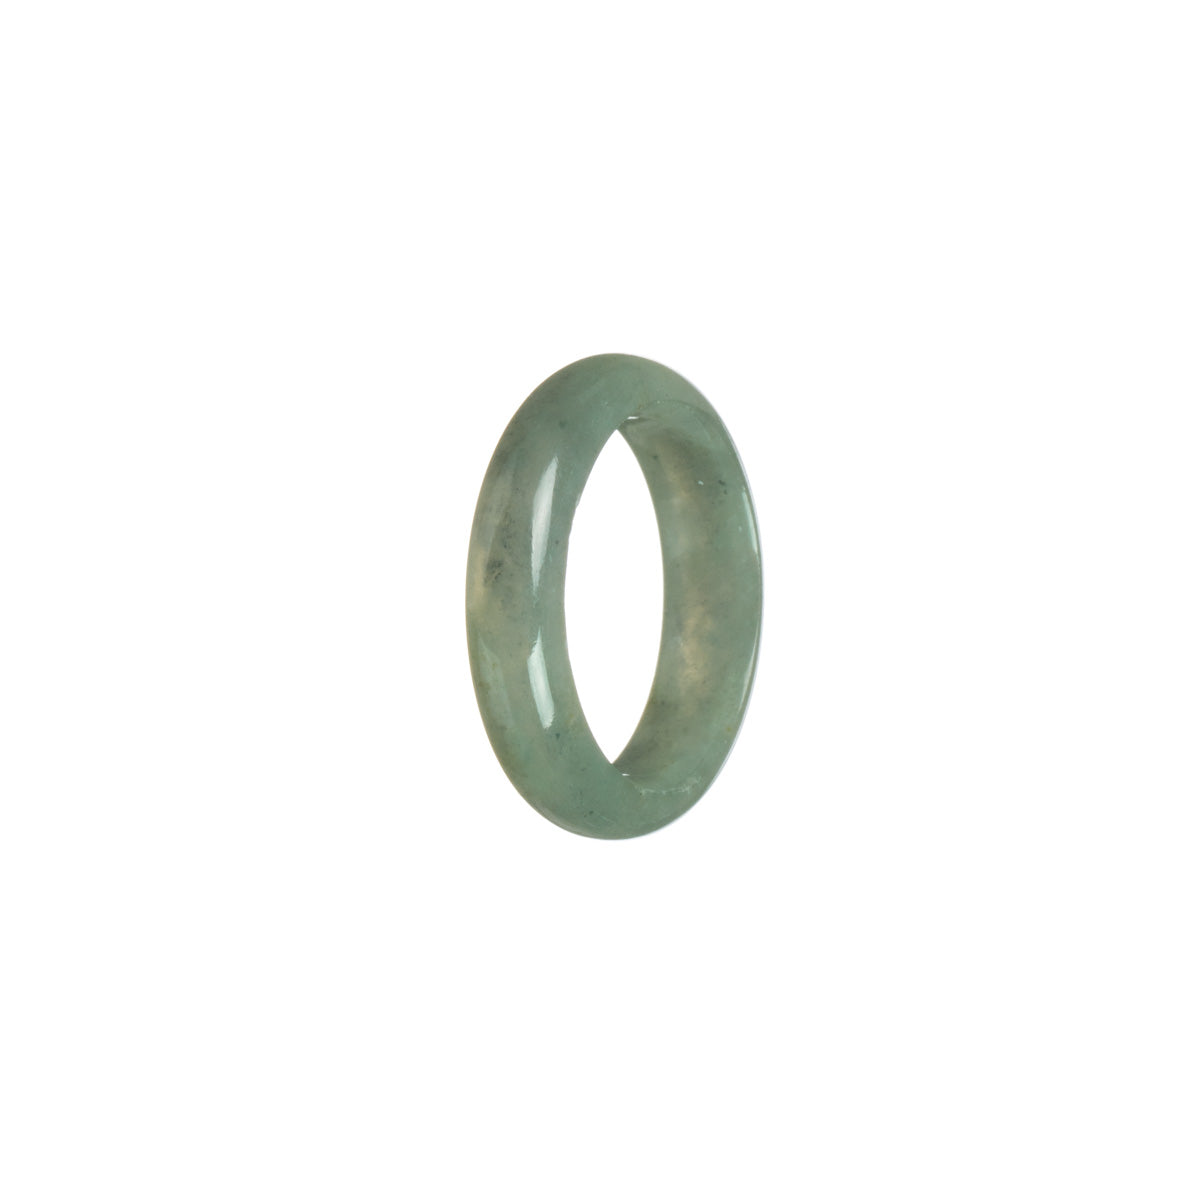 Authentic Greyish Olive Green Jadeite Jade Band - Size S 1/2